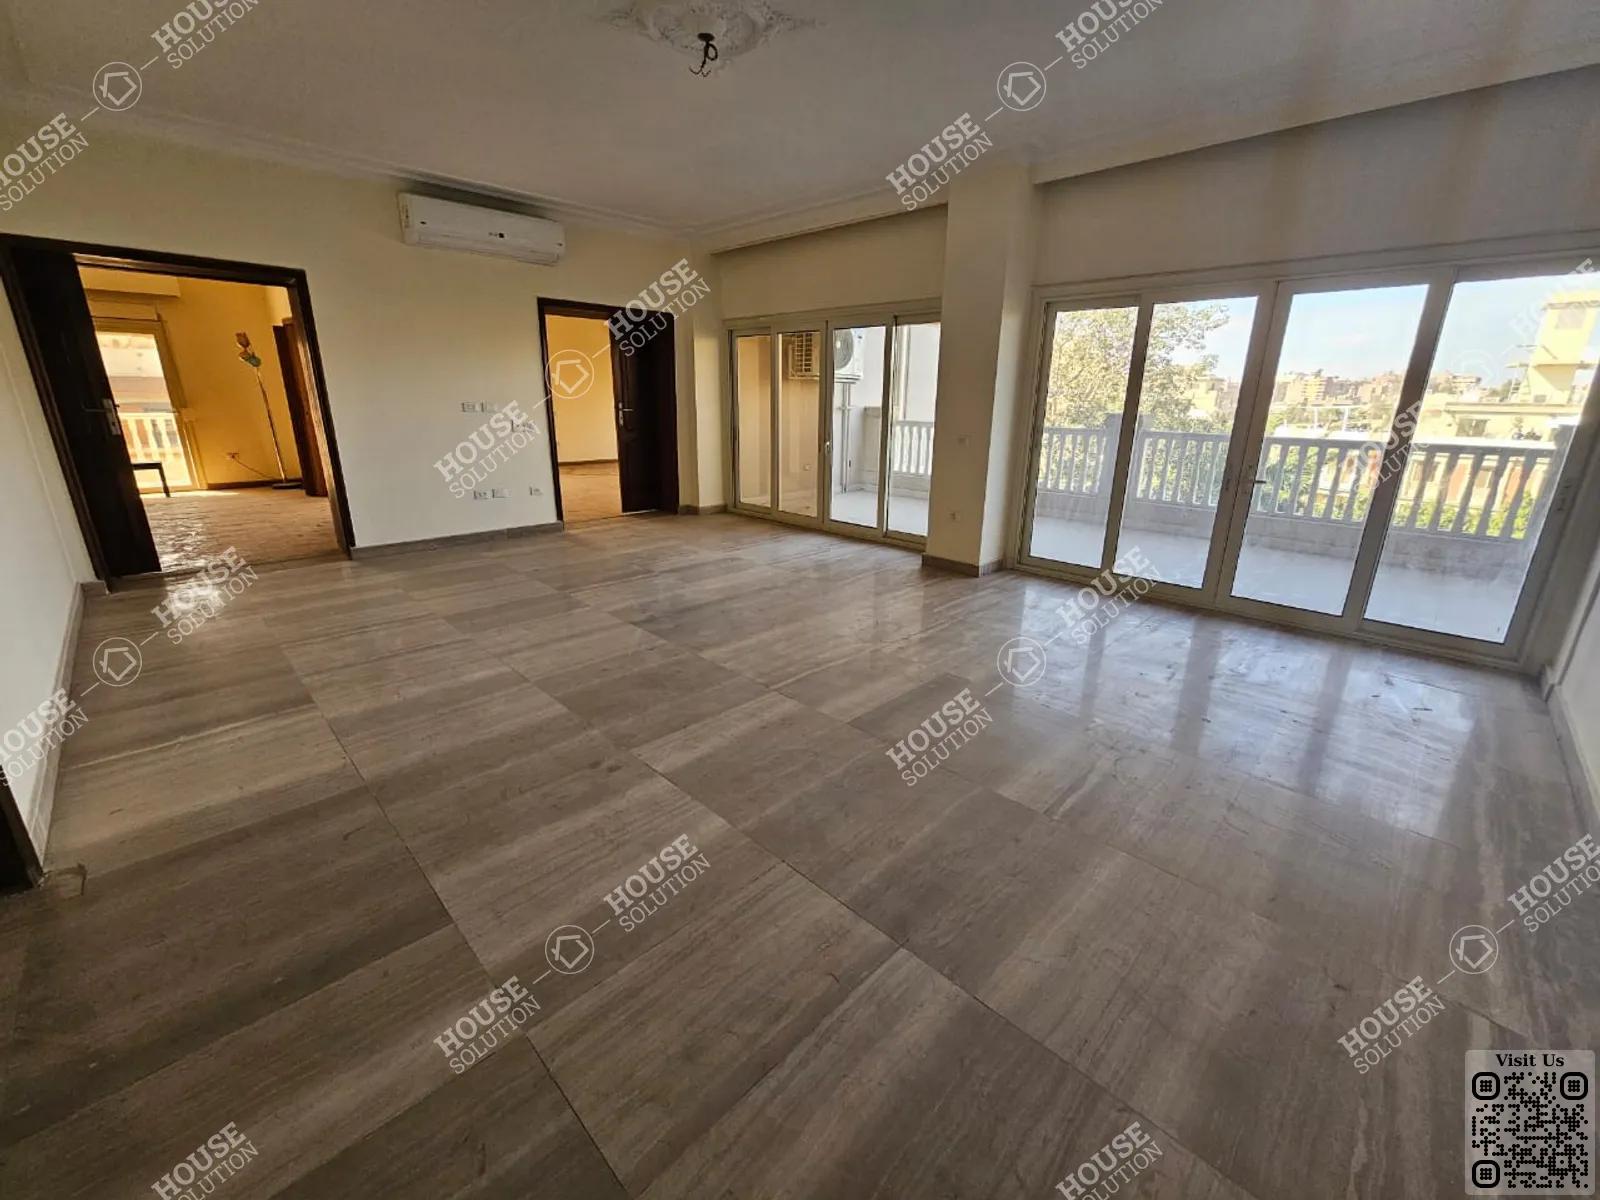 RECEPTION  @ Apartments For Rent In Maadi Maadi Sarayat Area: 500 m² consists of 3 Bedrooms 3 Bathrooms Semi furnished 5 stars #5815-0